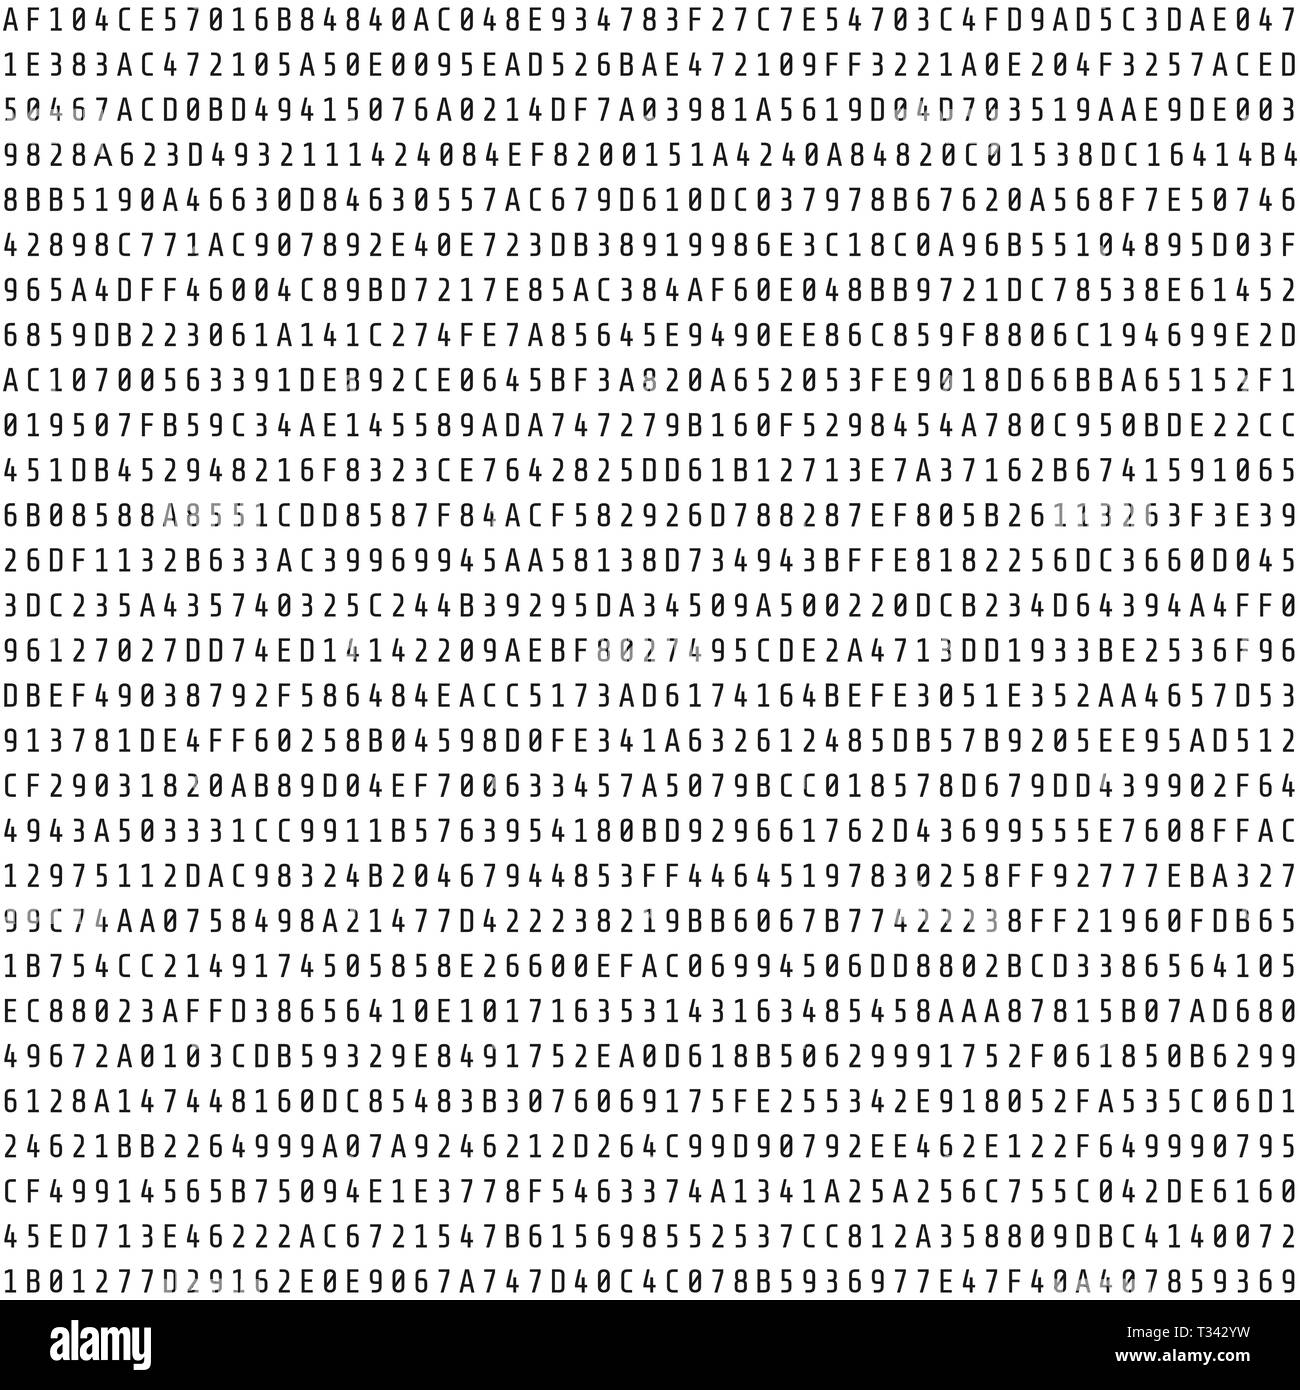 Random hexadecimal code stream. Abstract digital data element. Matrix background. Vector illustration isolated on white Stock Vector